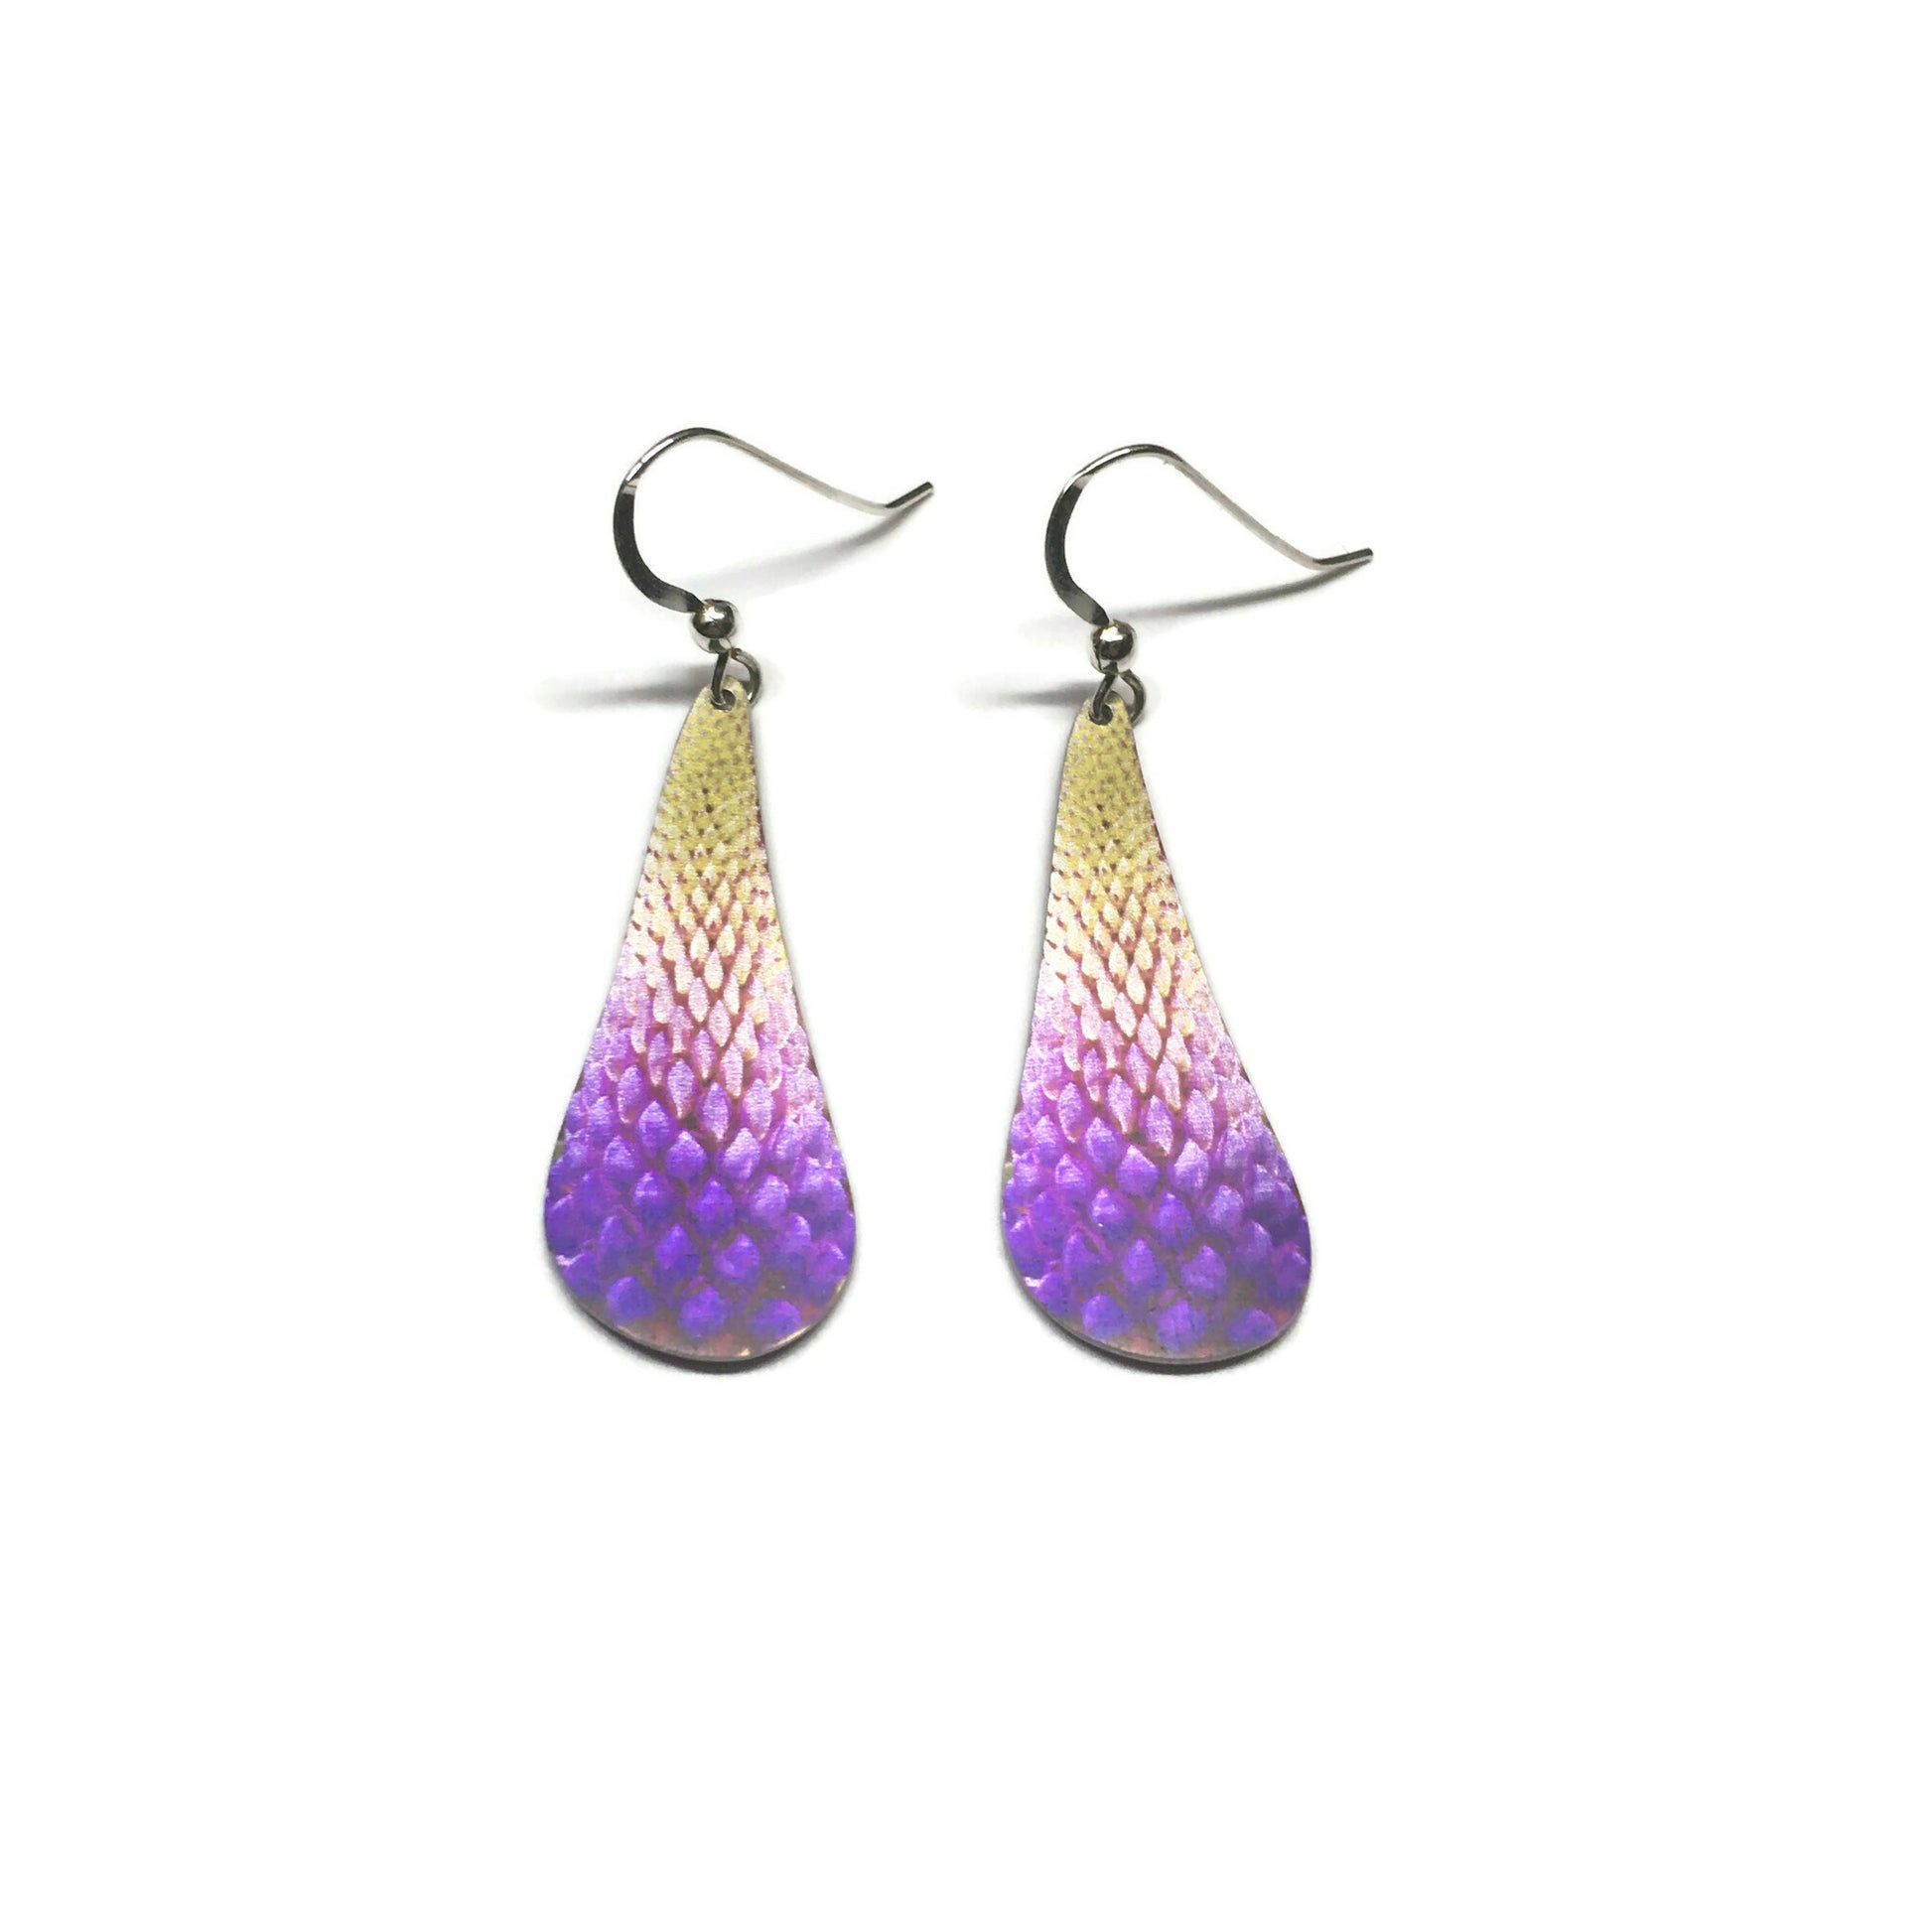 Lupin purple flower earrings by Photofinish Jewellery